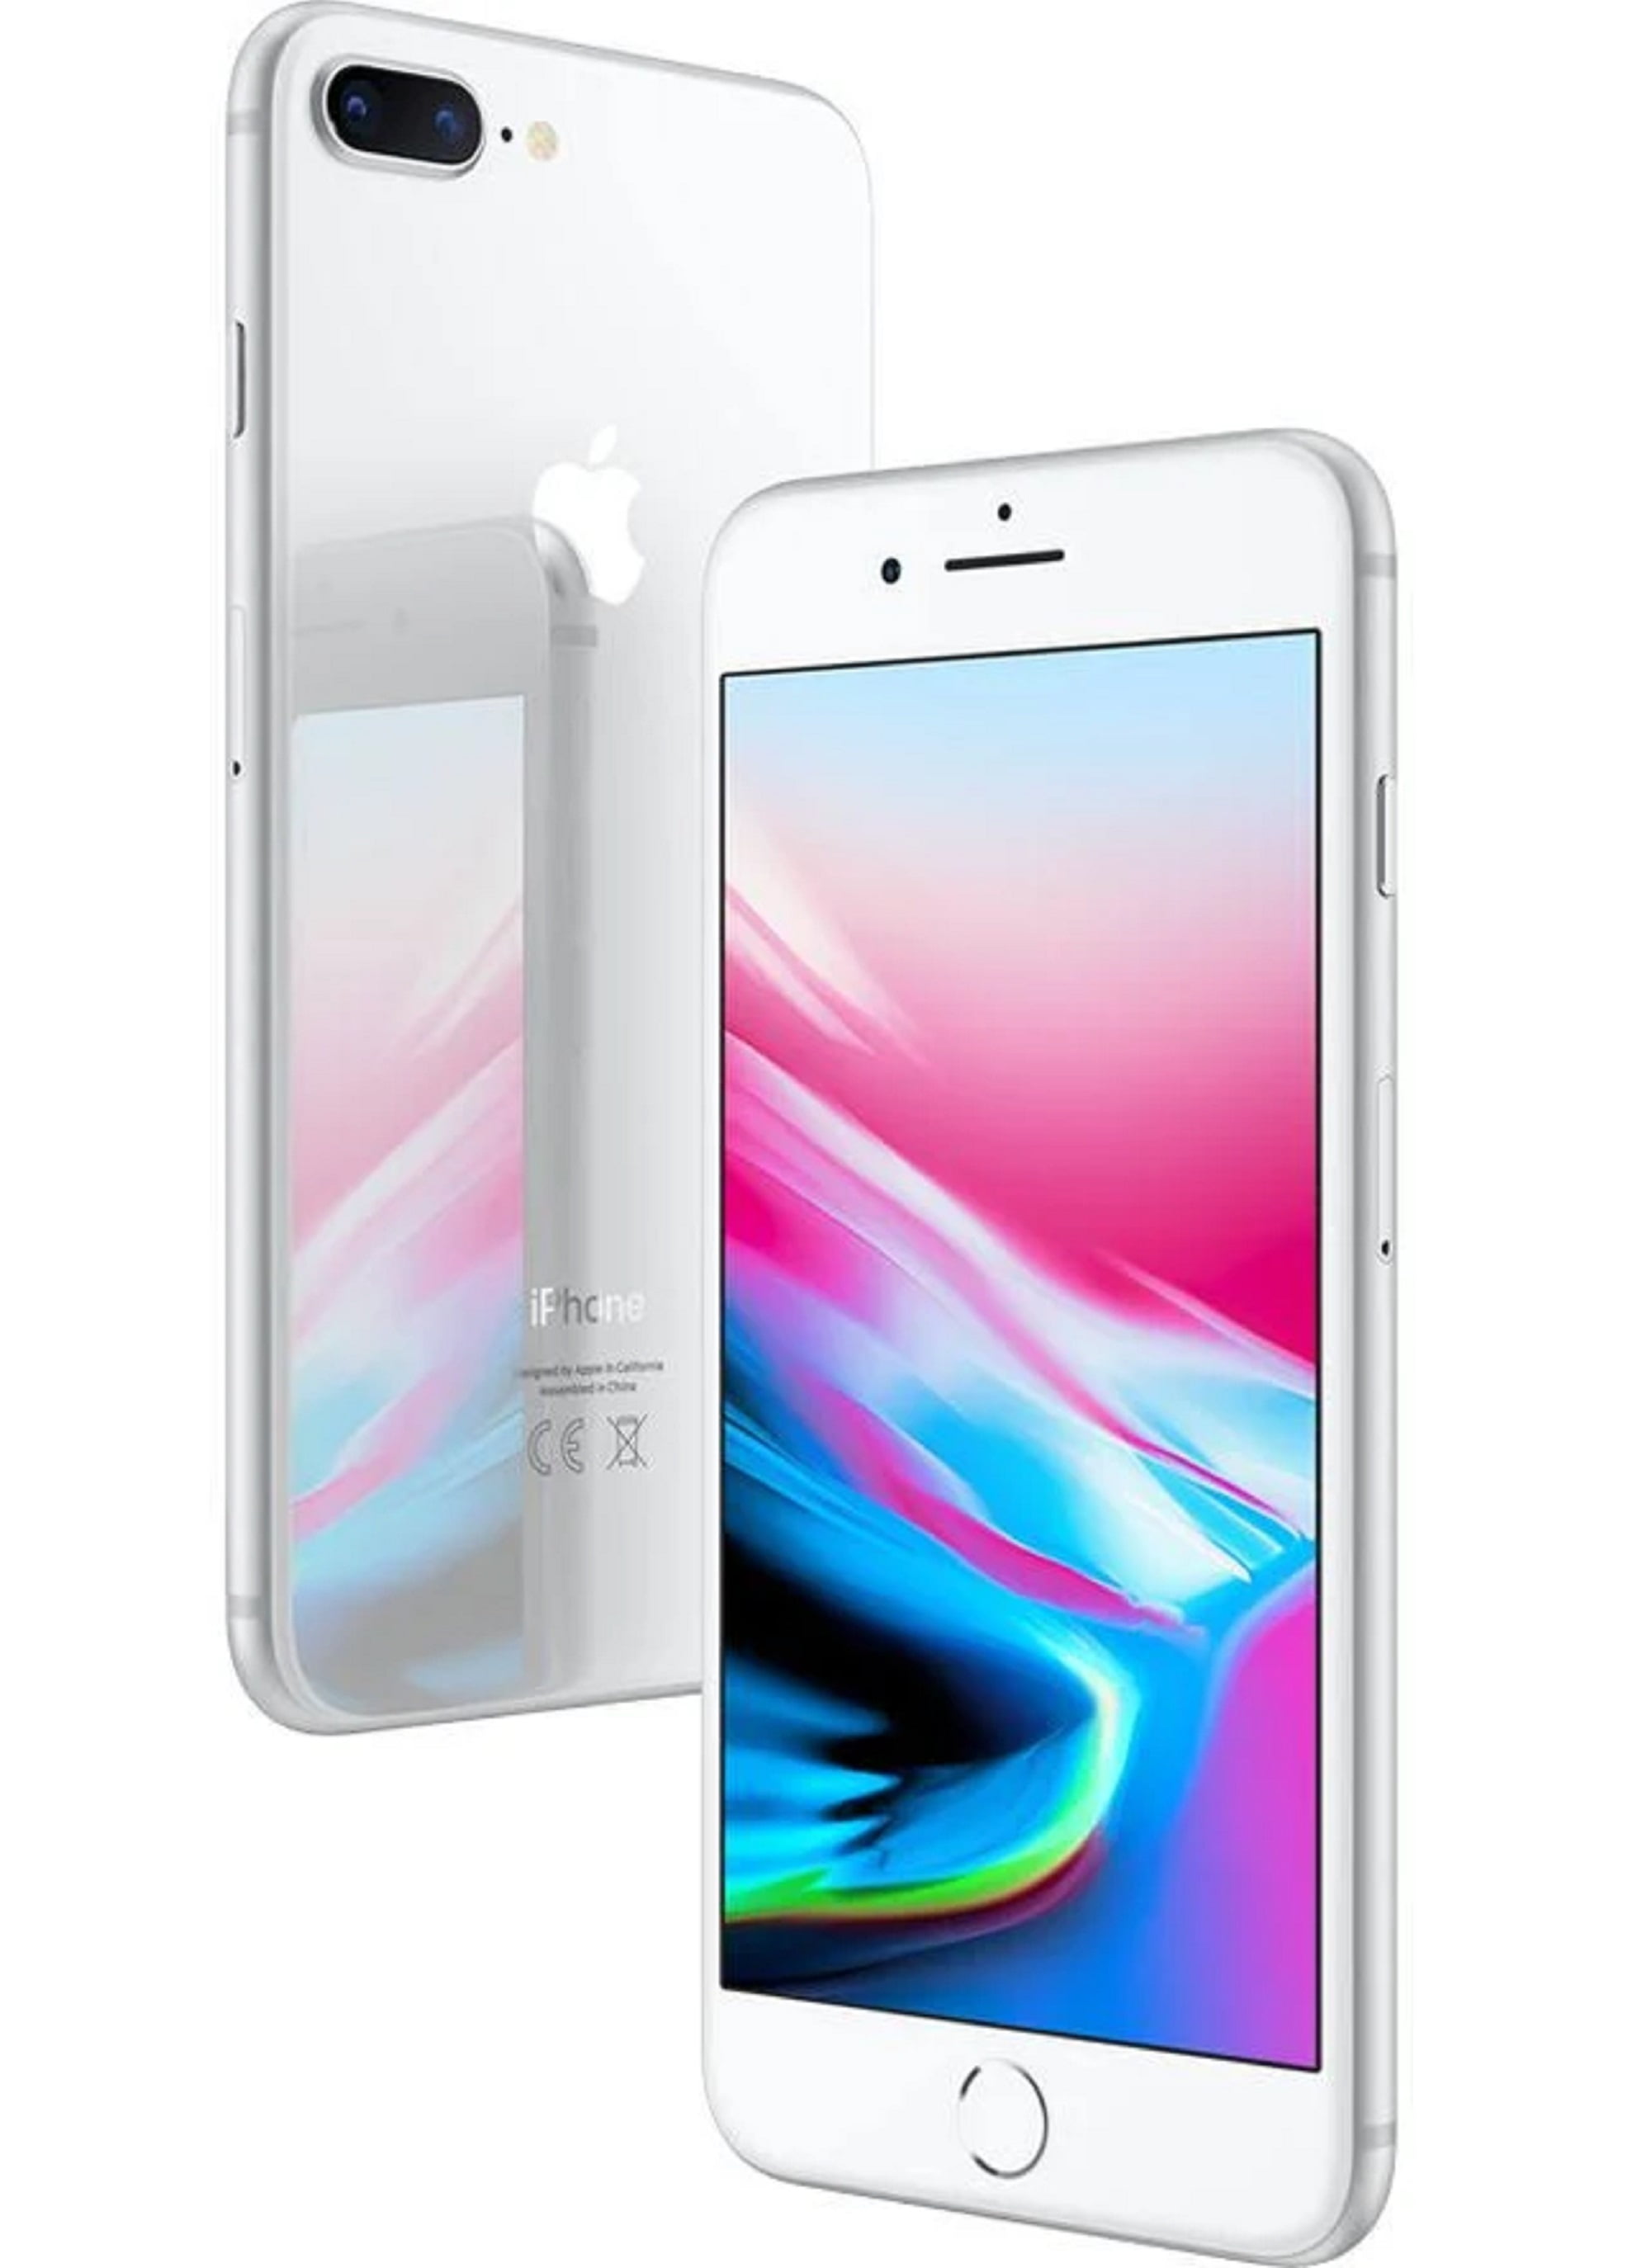 Apple iPhone 8 Plus A1897 64GB Gold (US Model) - Factory Unlocked 